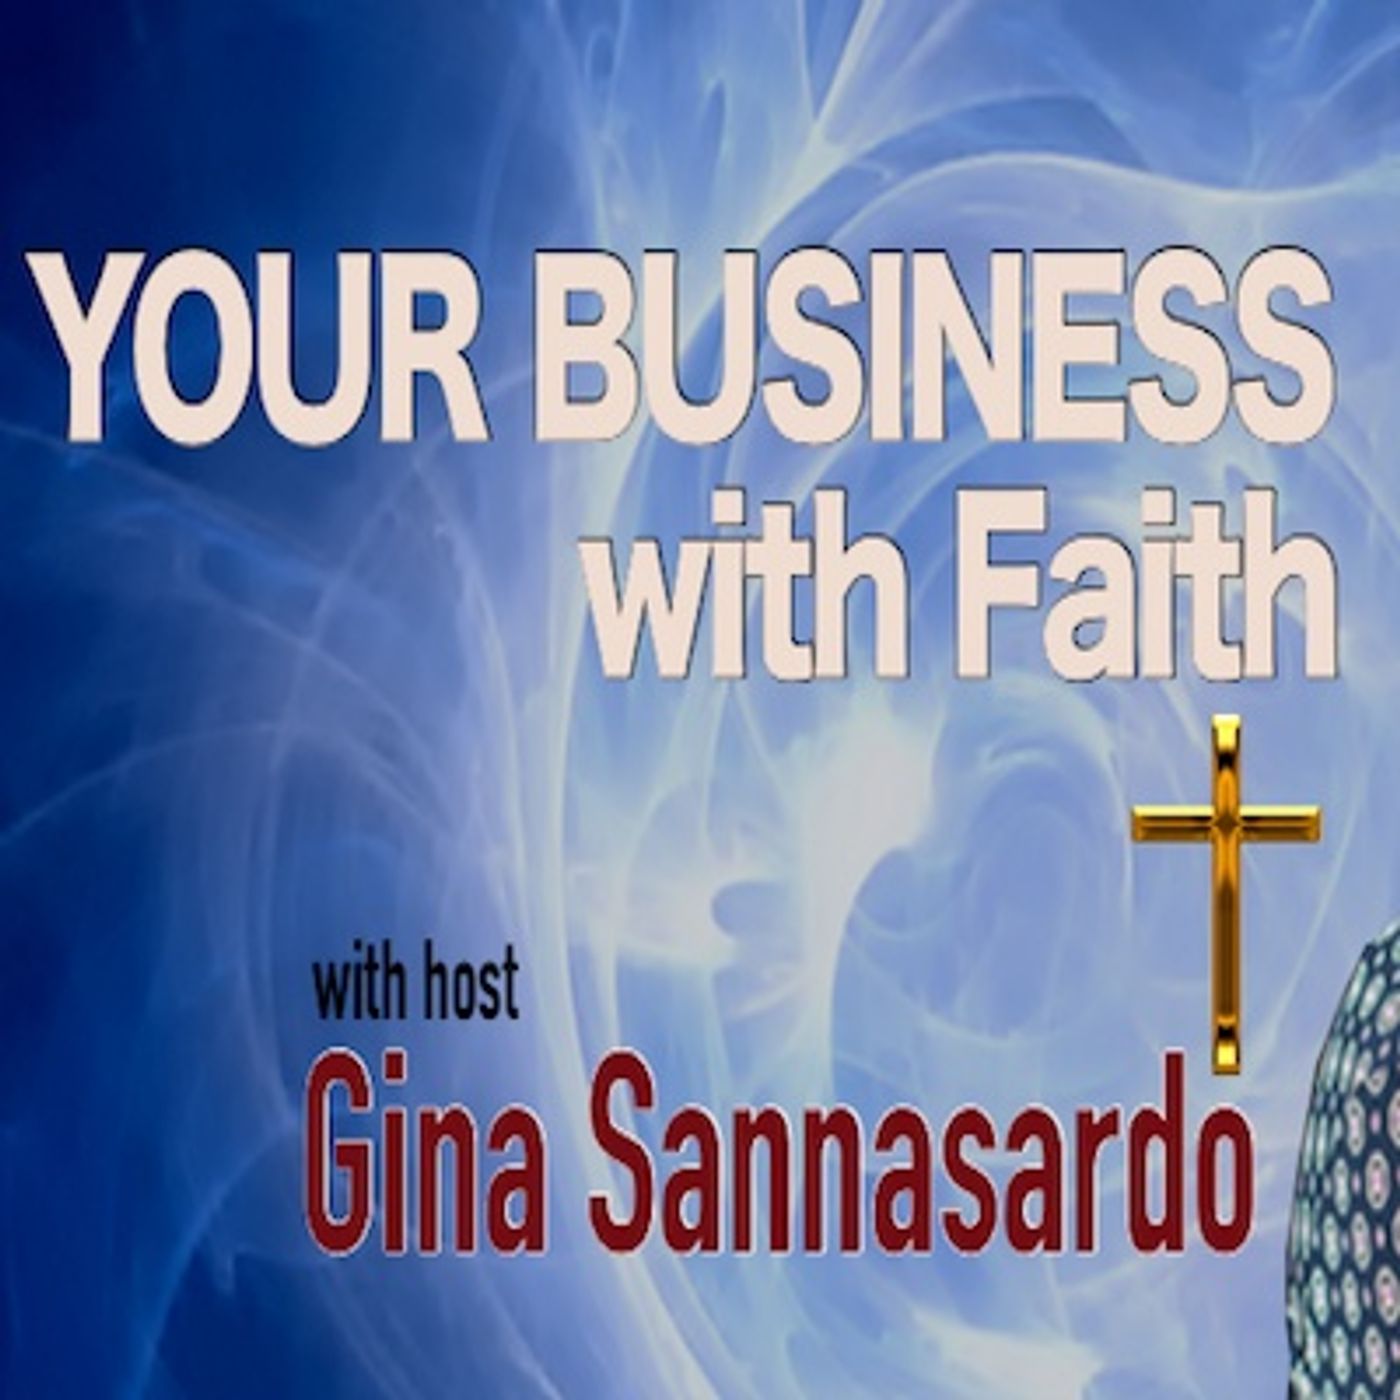 Your Business With Faith